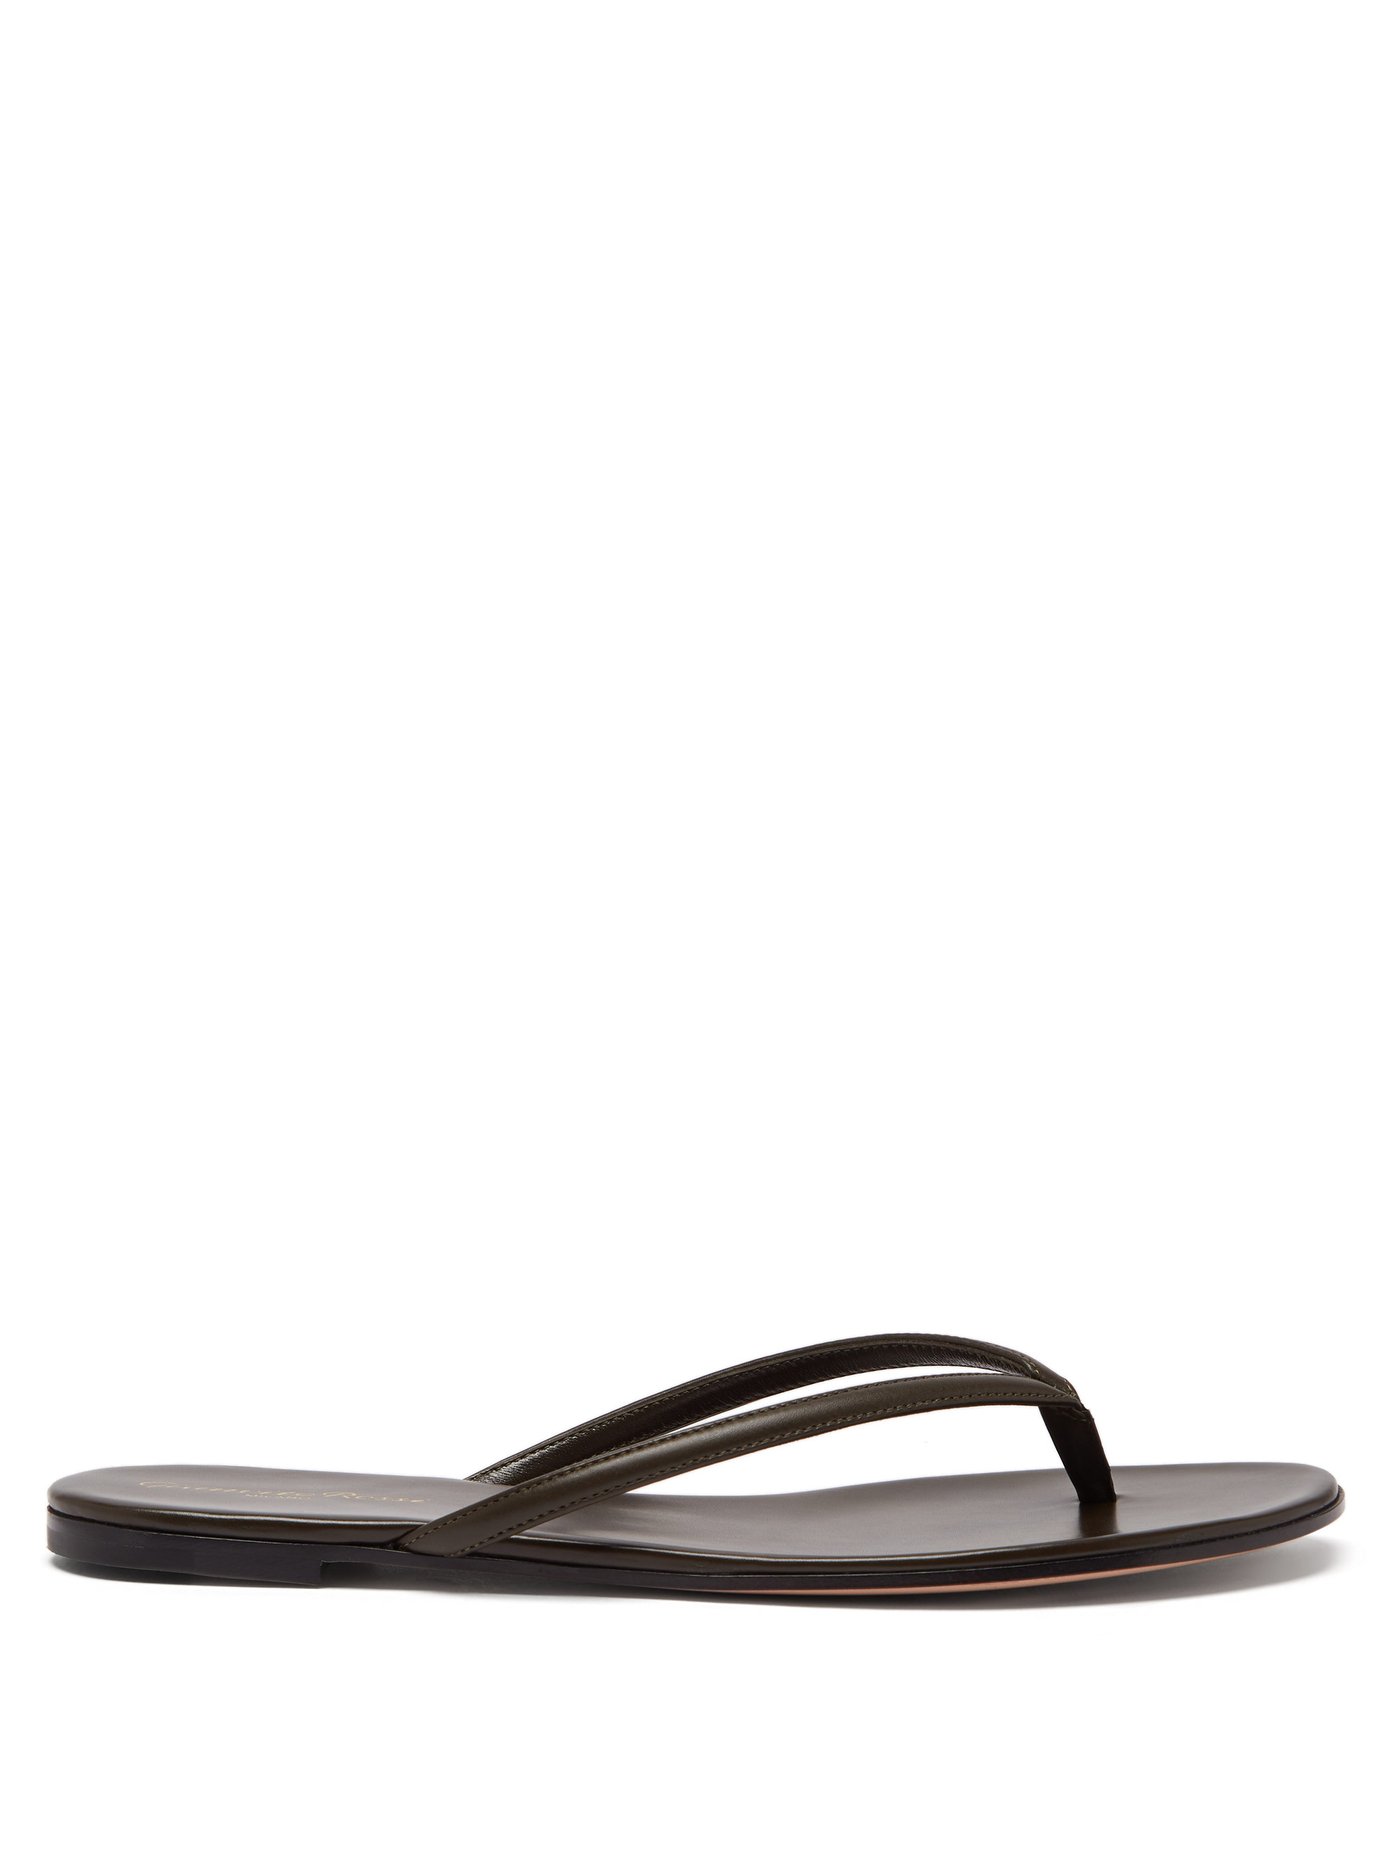 Calypso flat leather sandals | Gianvito 